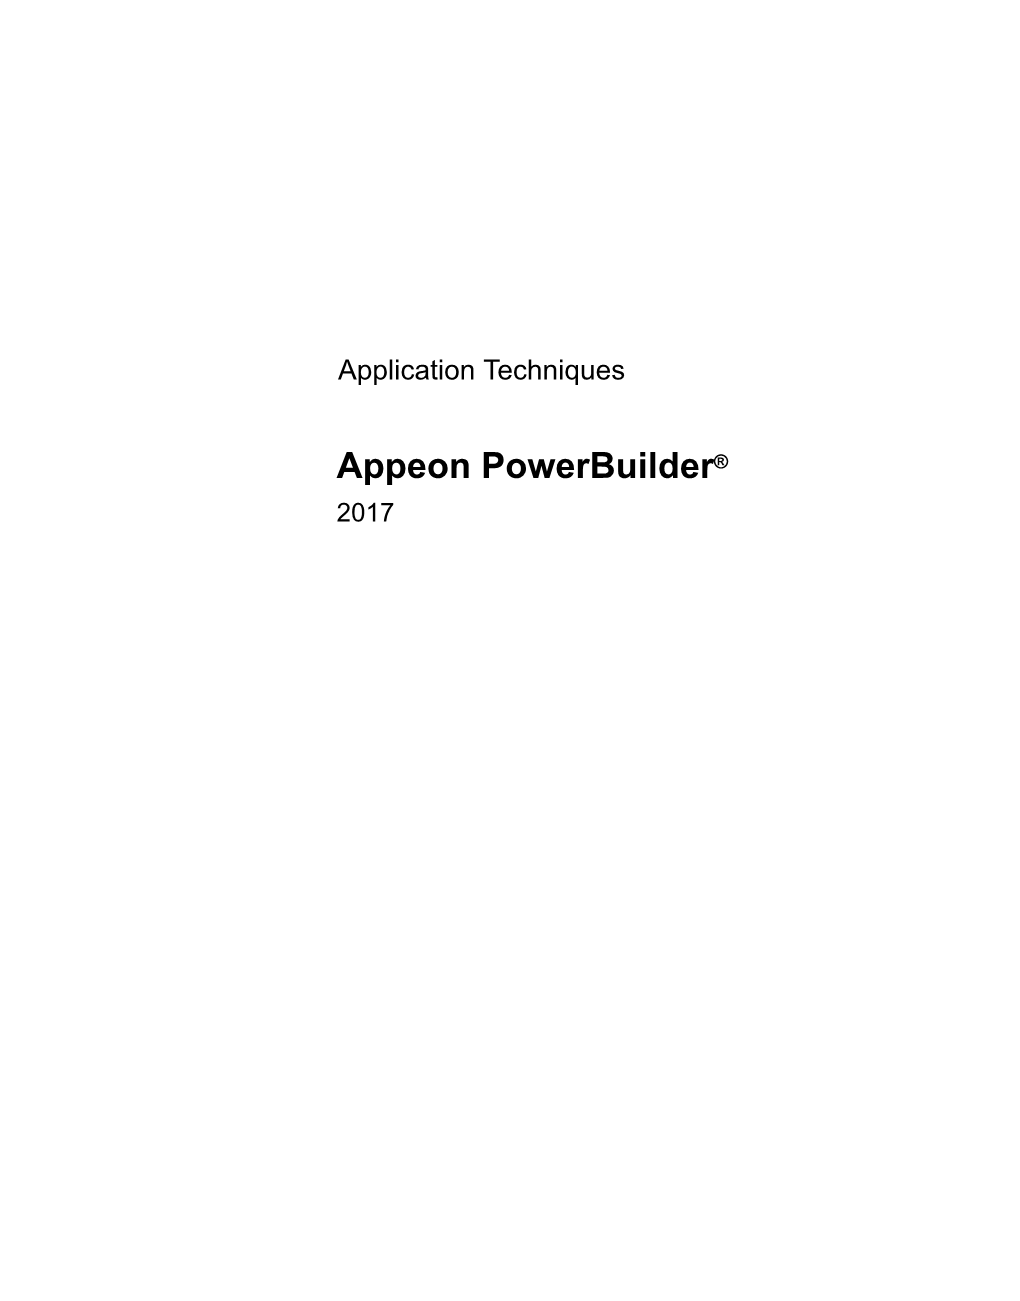 Appeon Powerbuilder® 2017 DOCUMENT ID: DC37774-01-1700-01